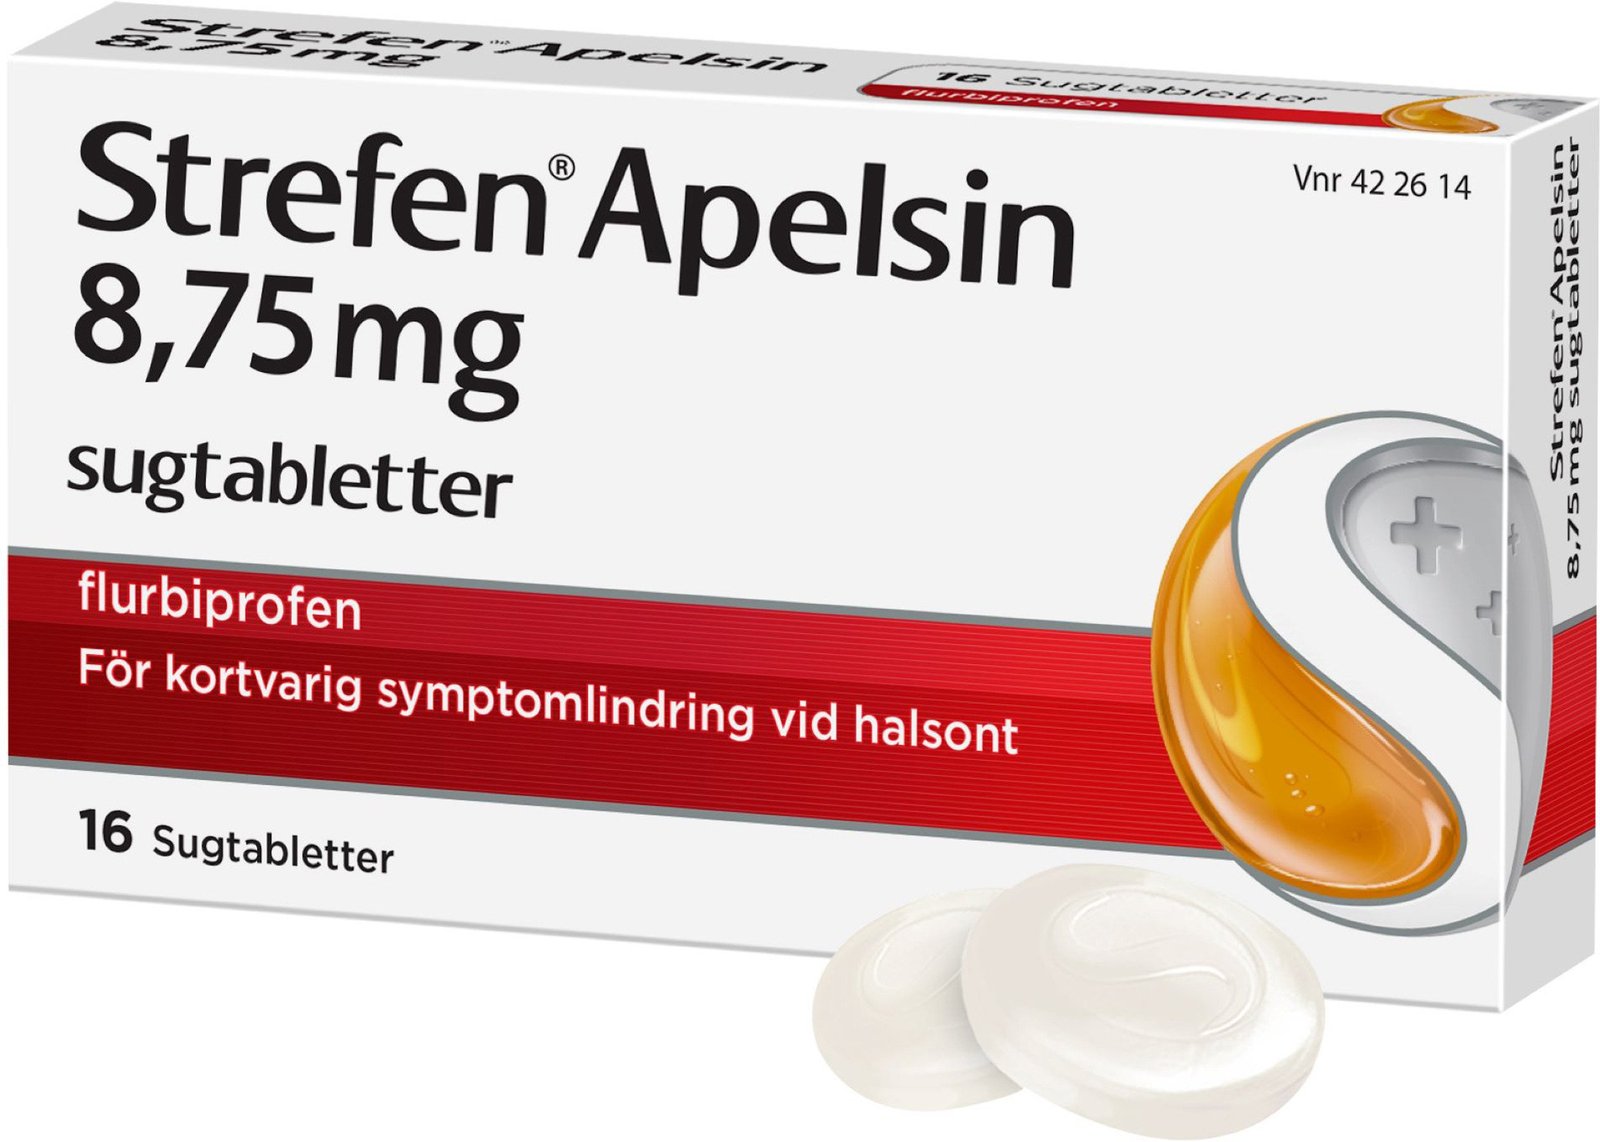 Strefen Apelsin 8,75 mg flurbiprofen 16 sugtabletter